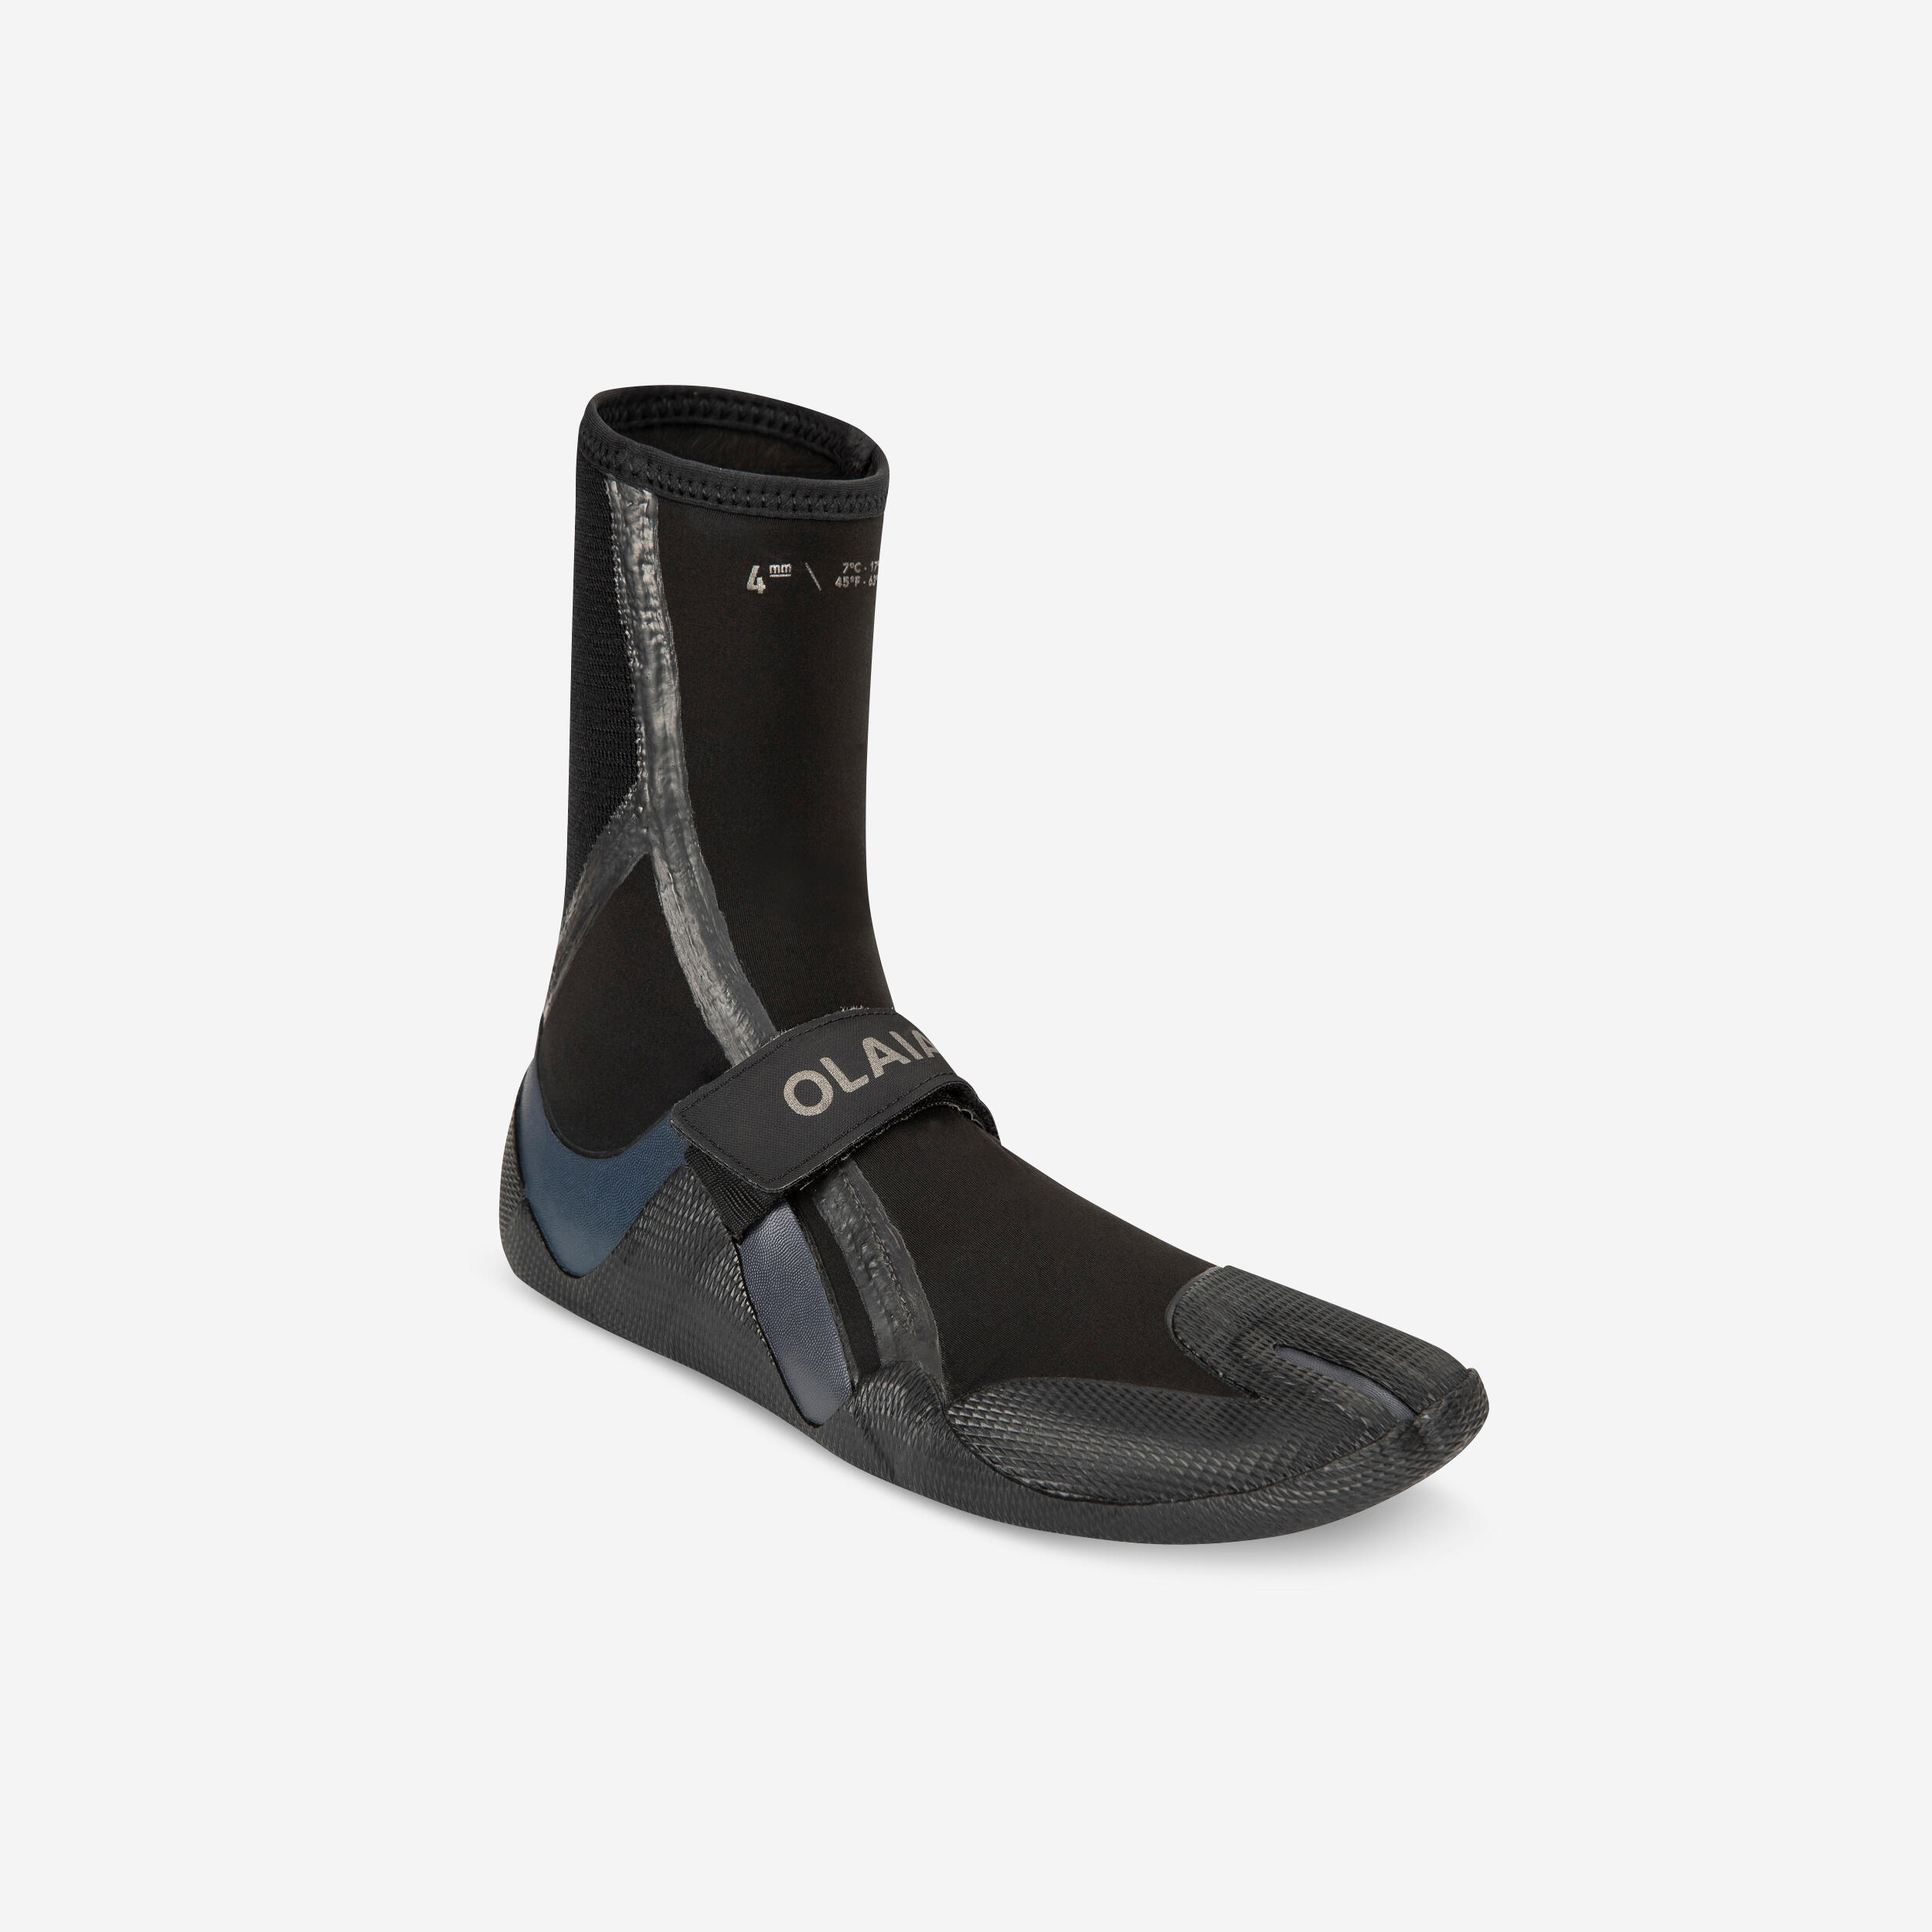 Neoprene surfing boots booties 900 4 mm - black/grey OLAIAN